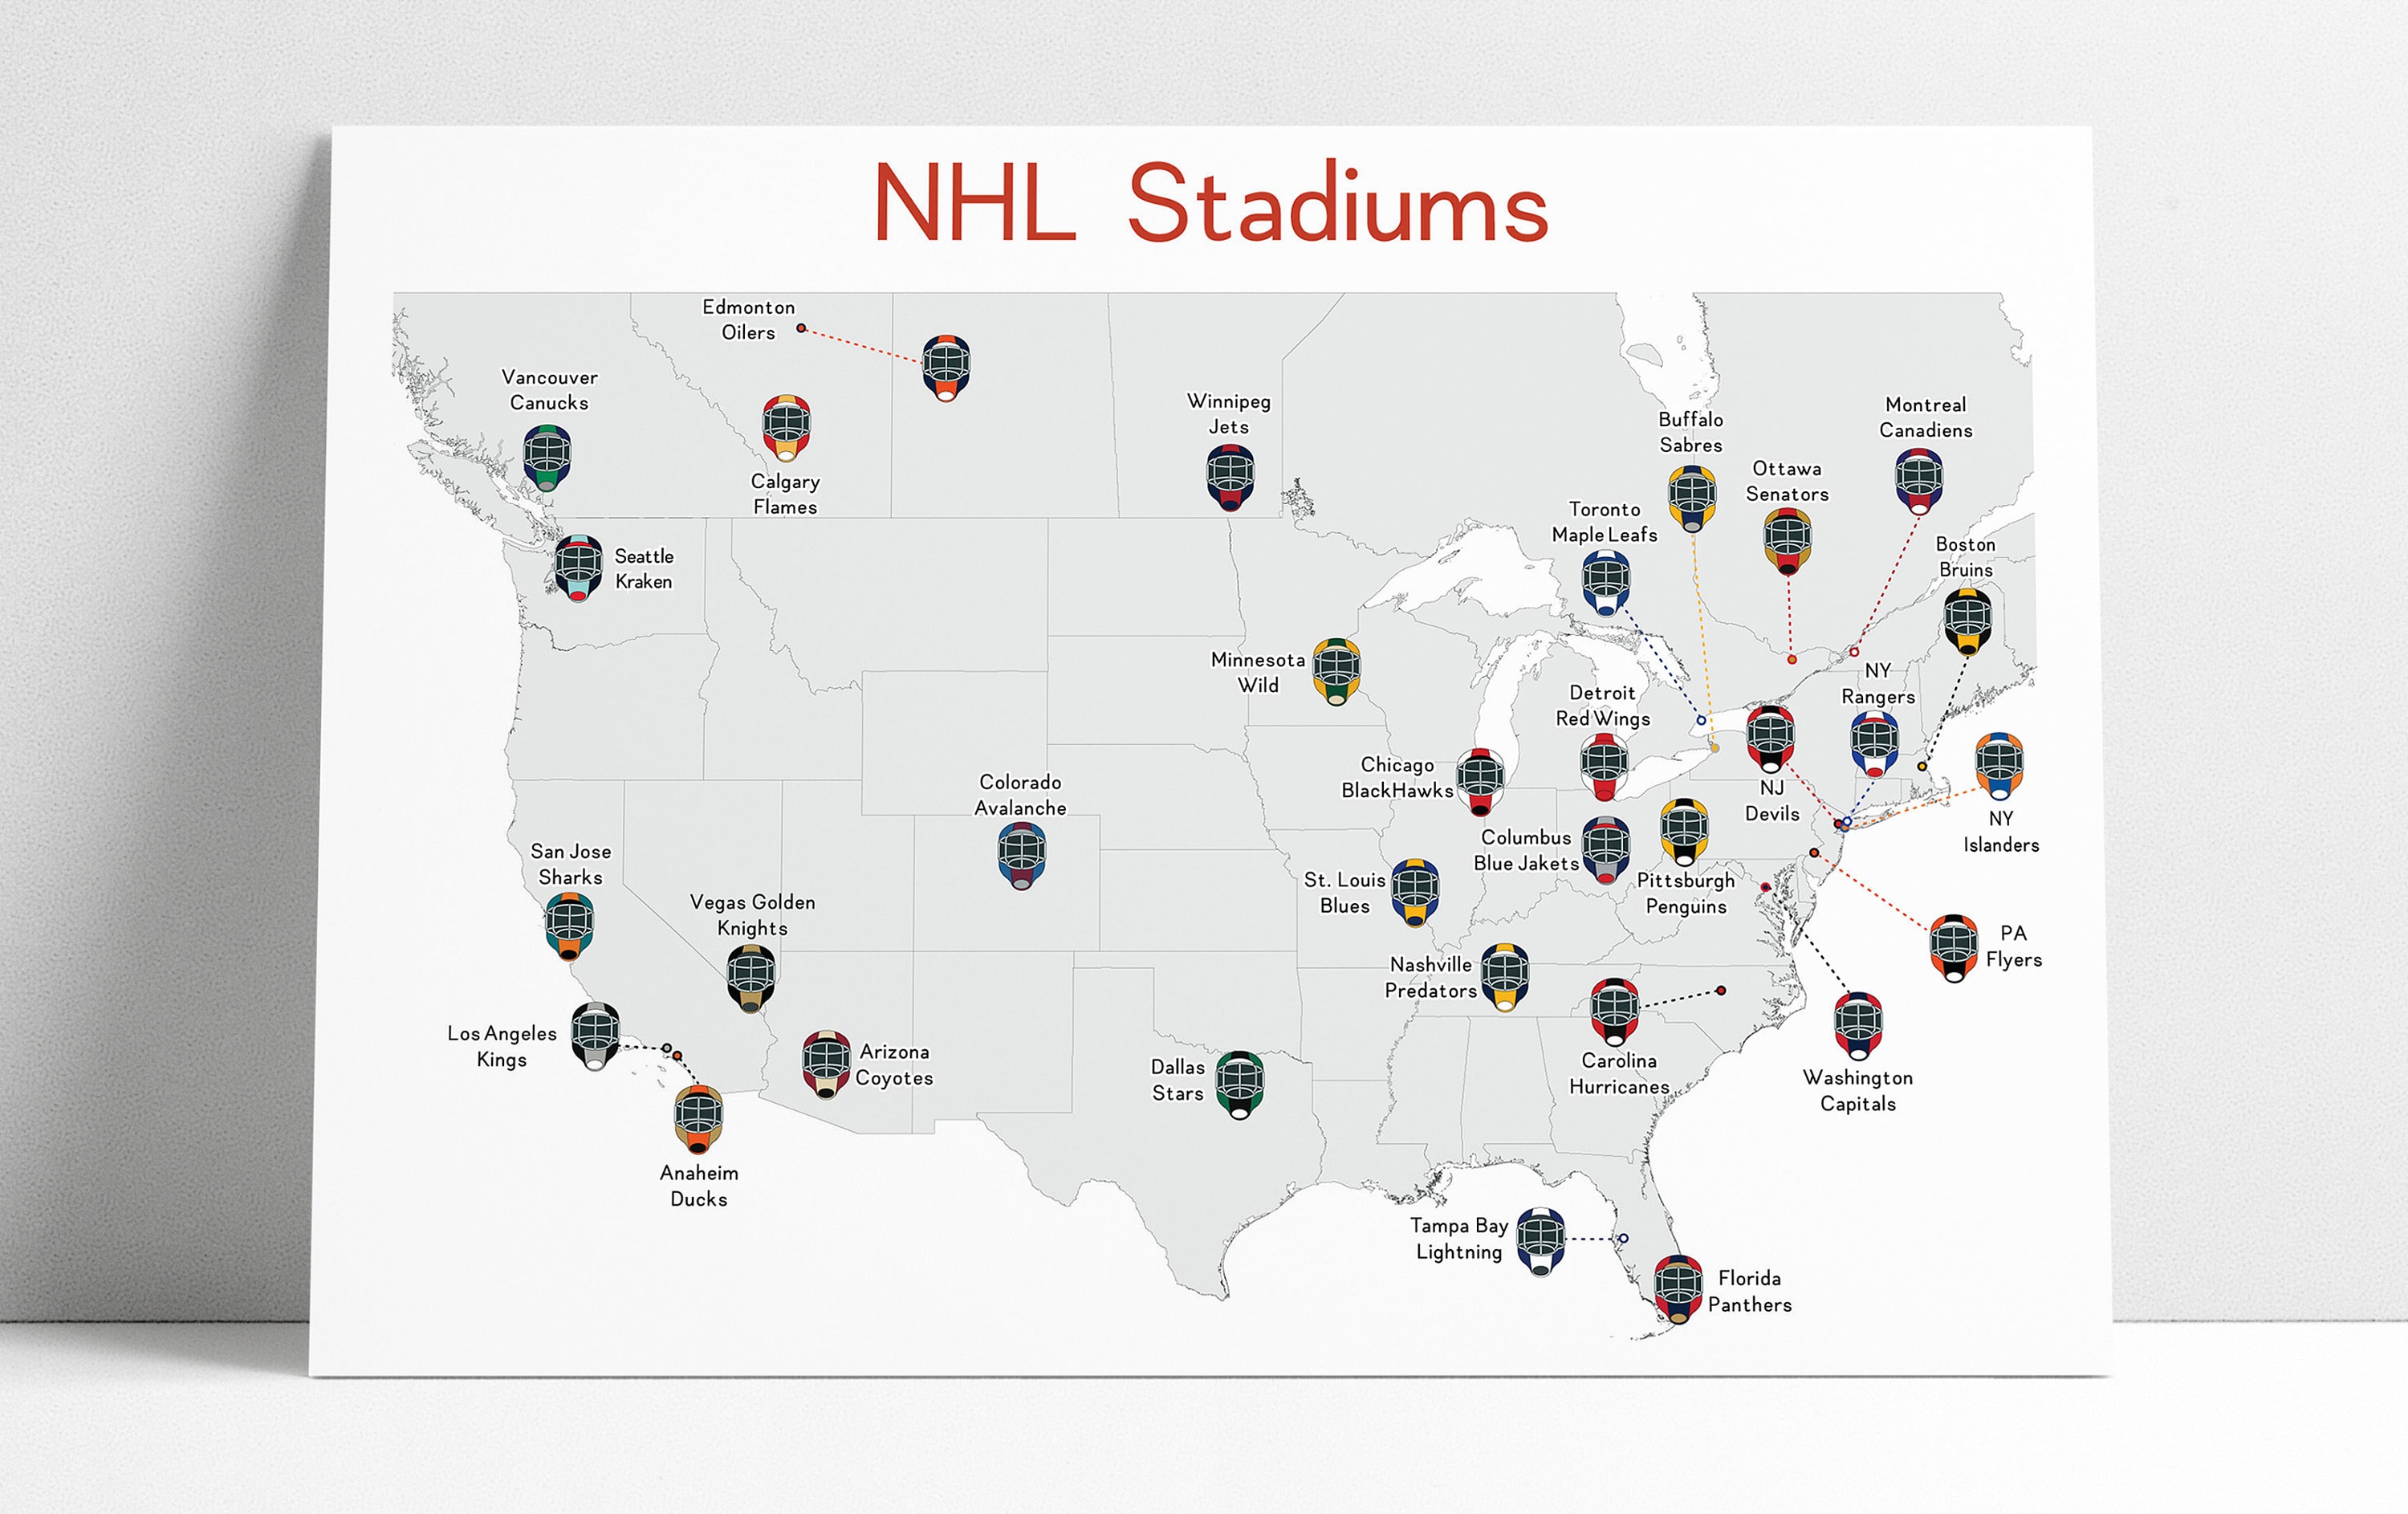 NHL Arena Parking Guide: Maps, Tips, Deals